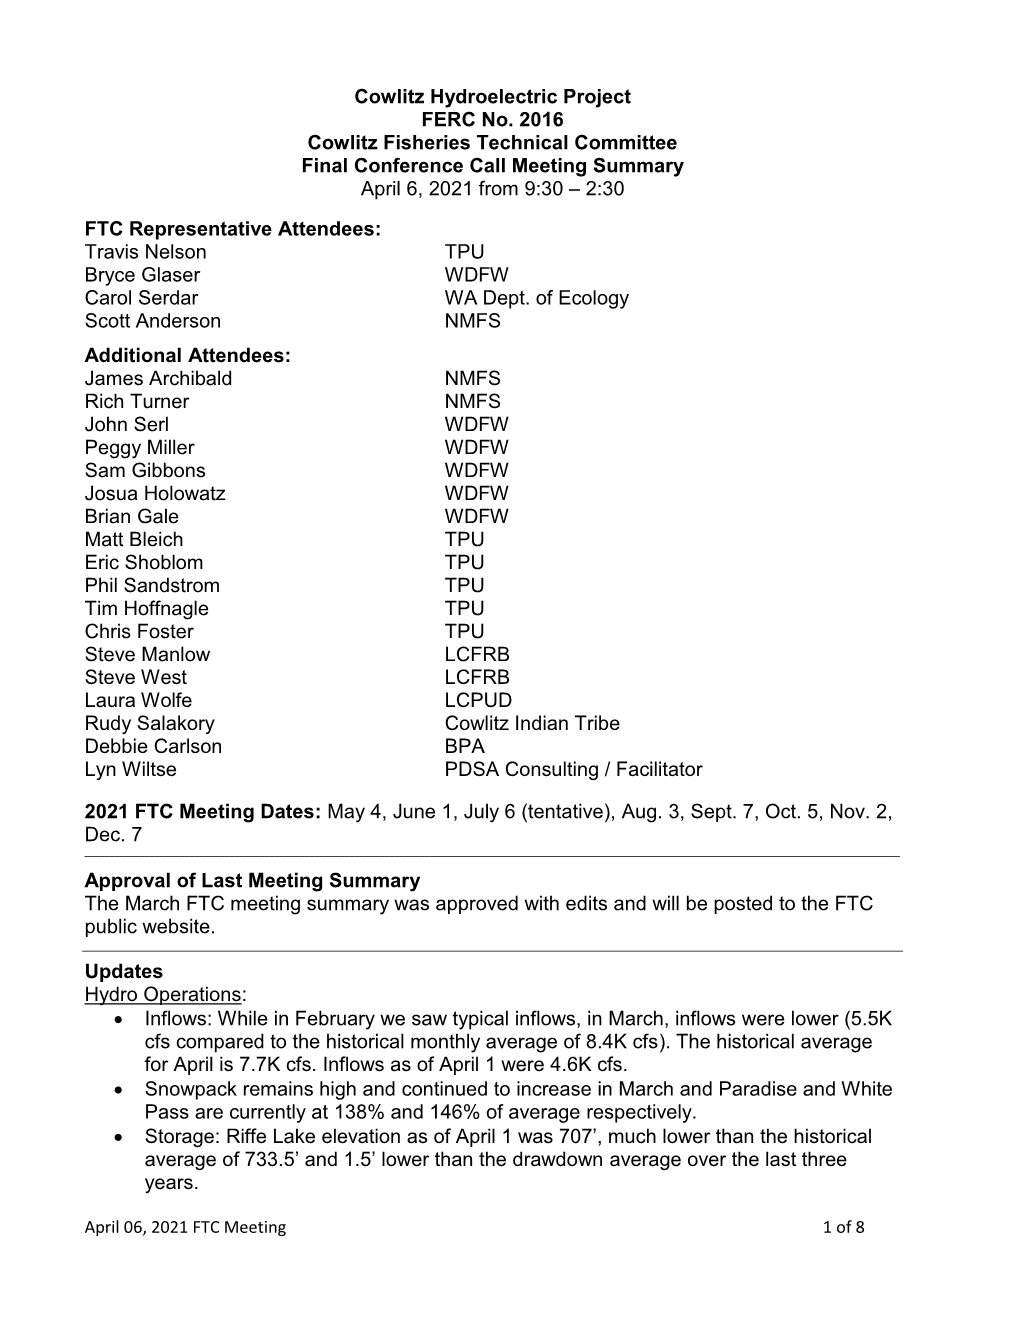 4-06-21 Final FTC Meeting Summary